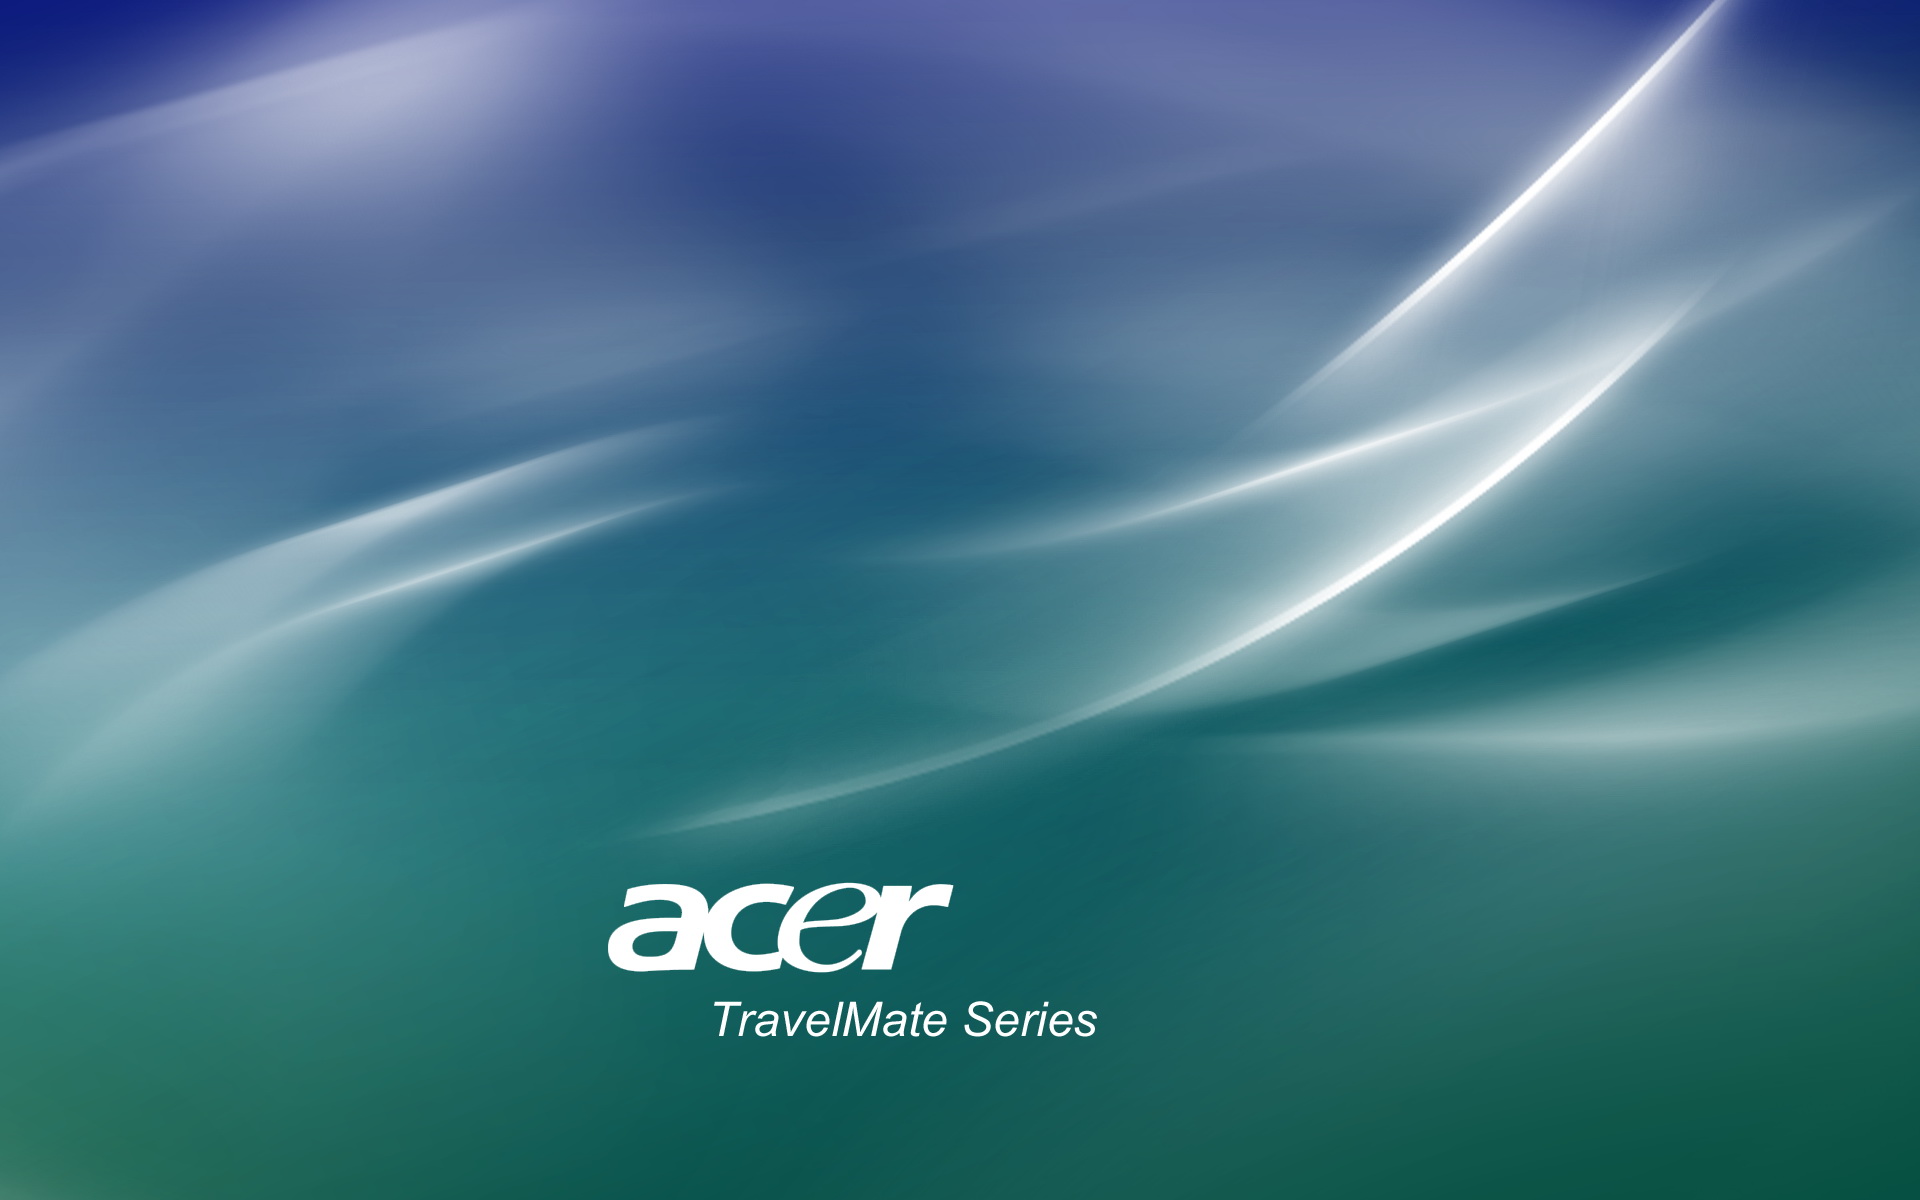 Top Acer Apple Wallpaper Backgrounds